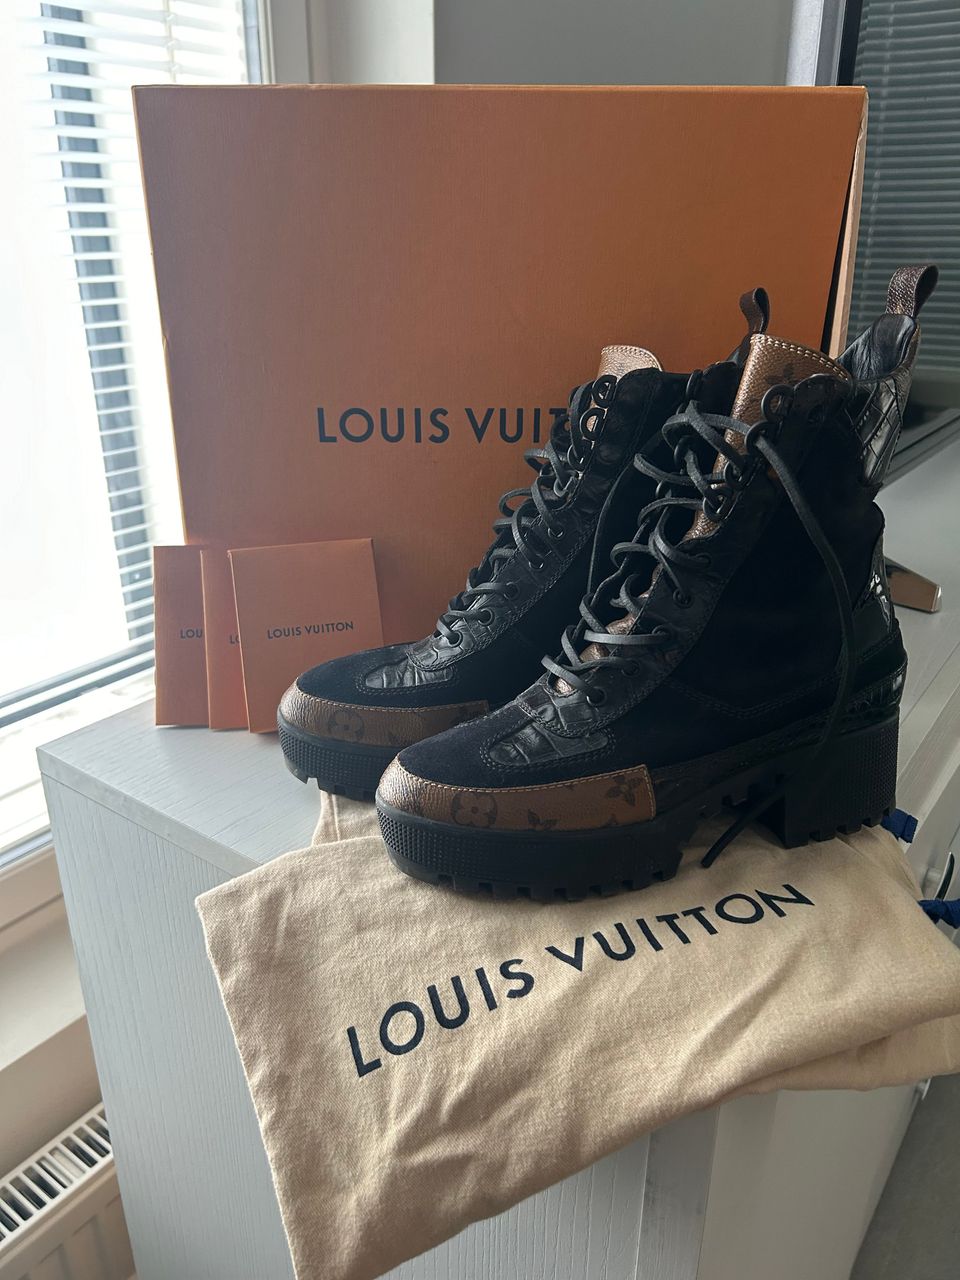 Louis Vuitton Laureate nilkkurit